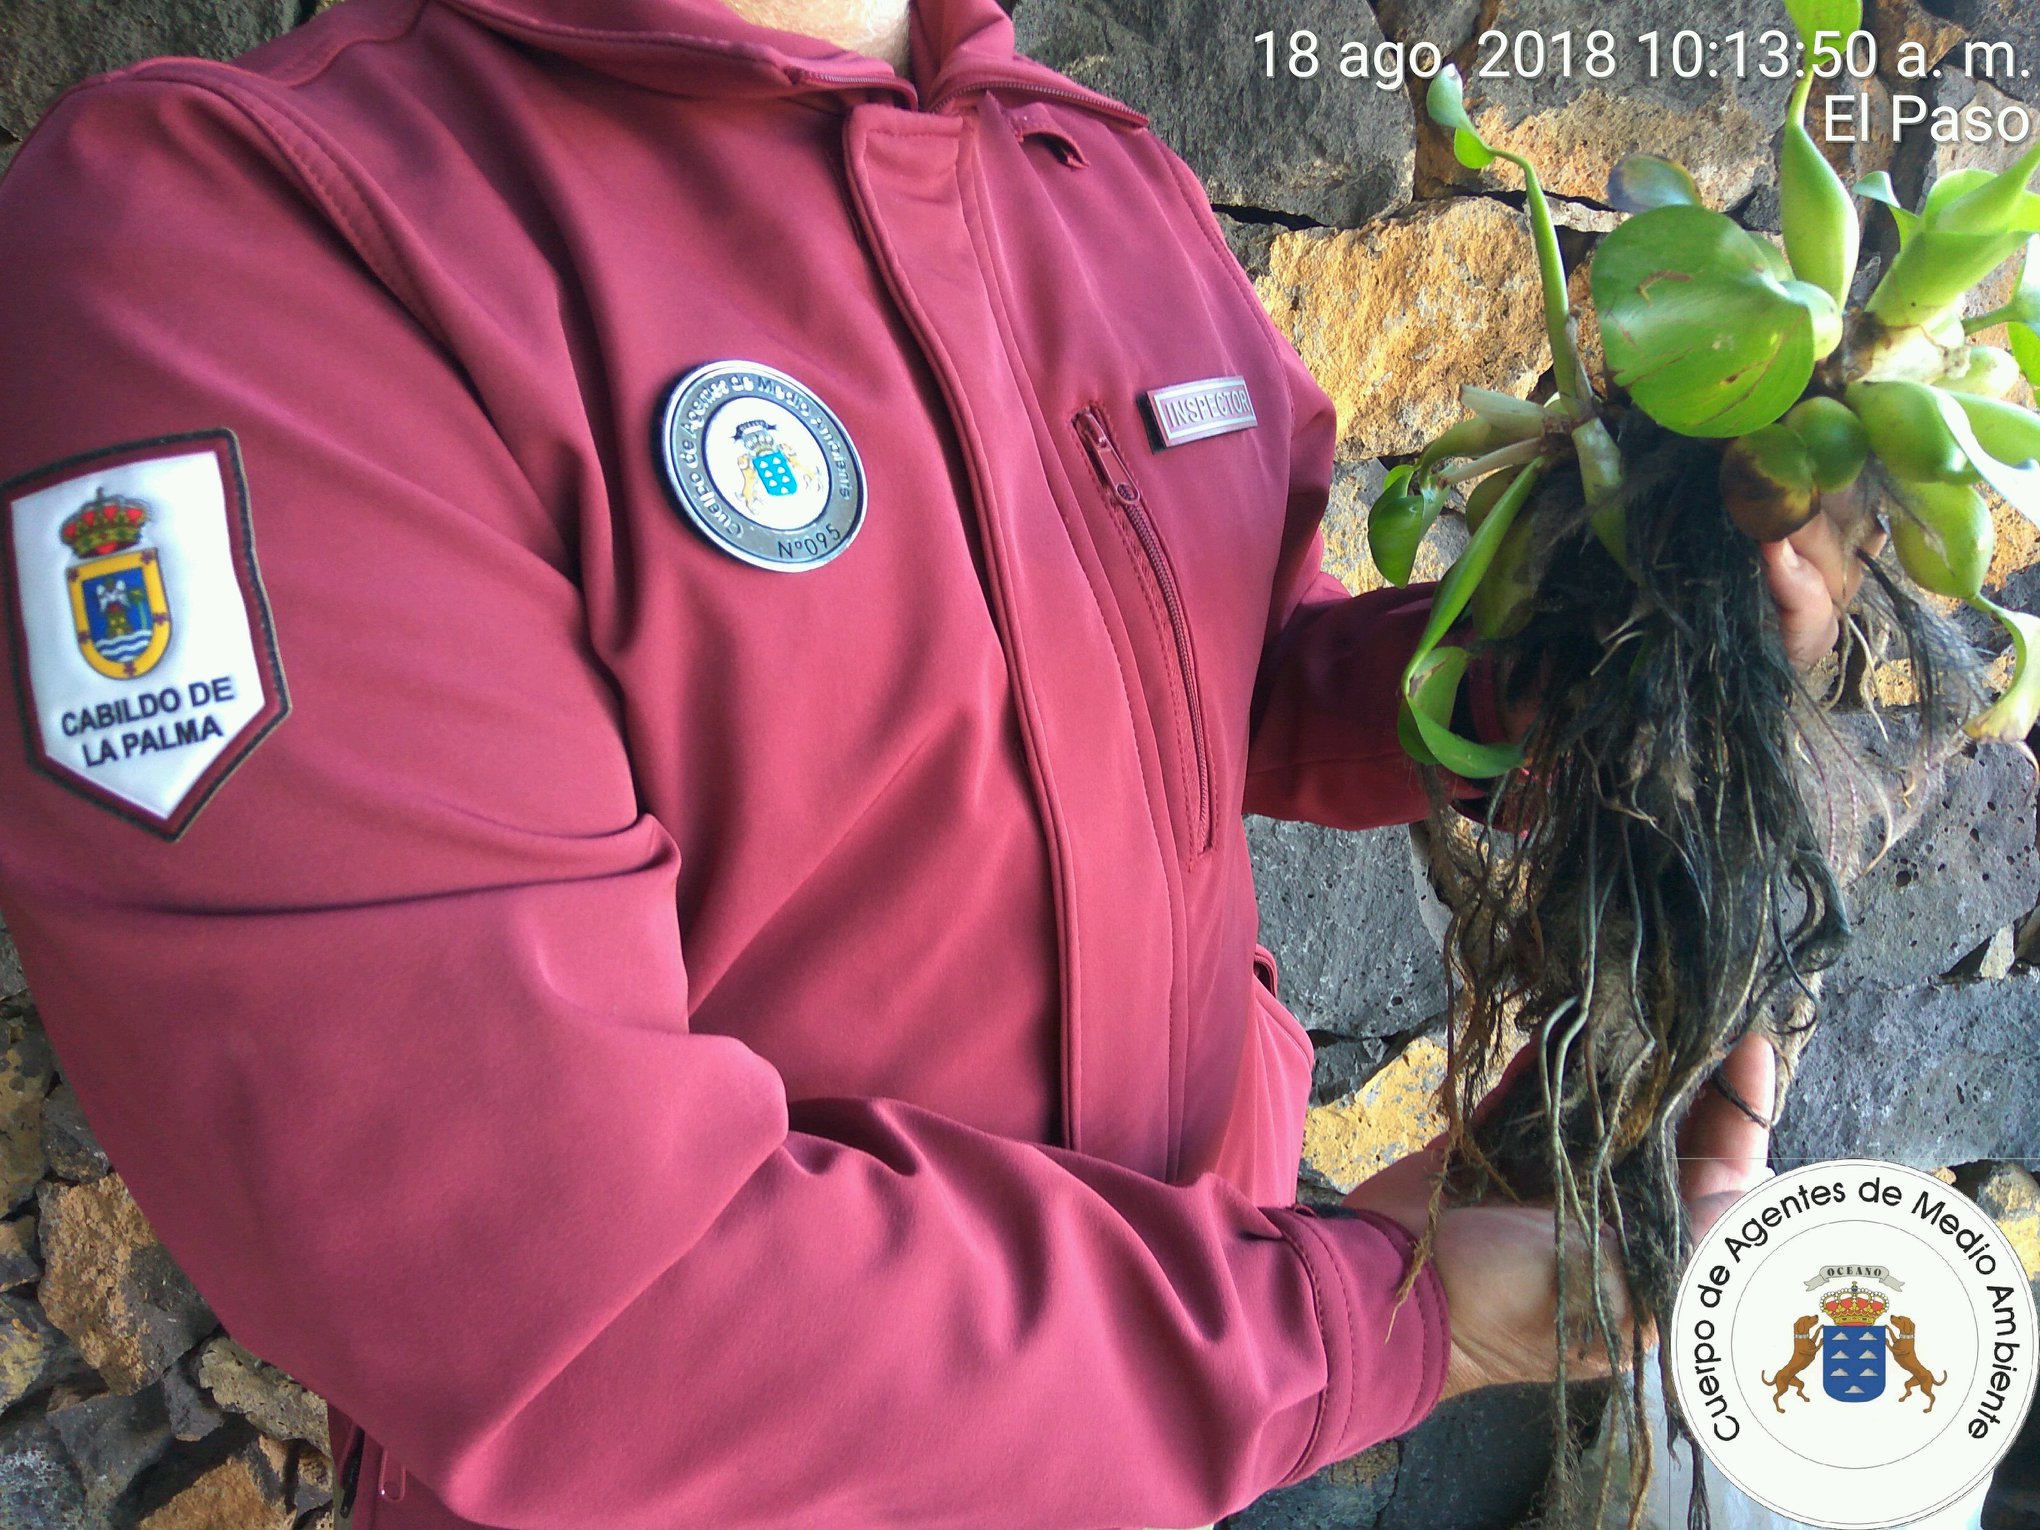 Invasive Wasserhyazinthe auf La Palma entdeckt